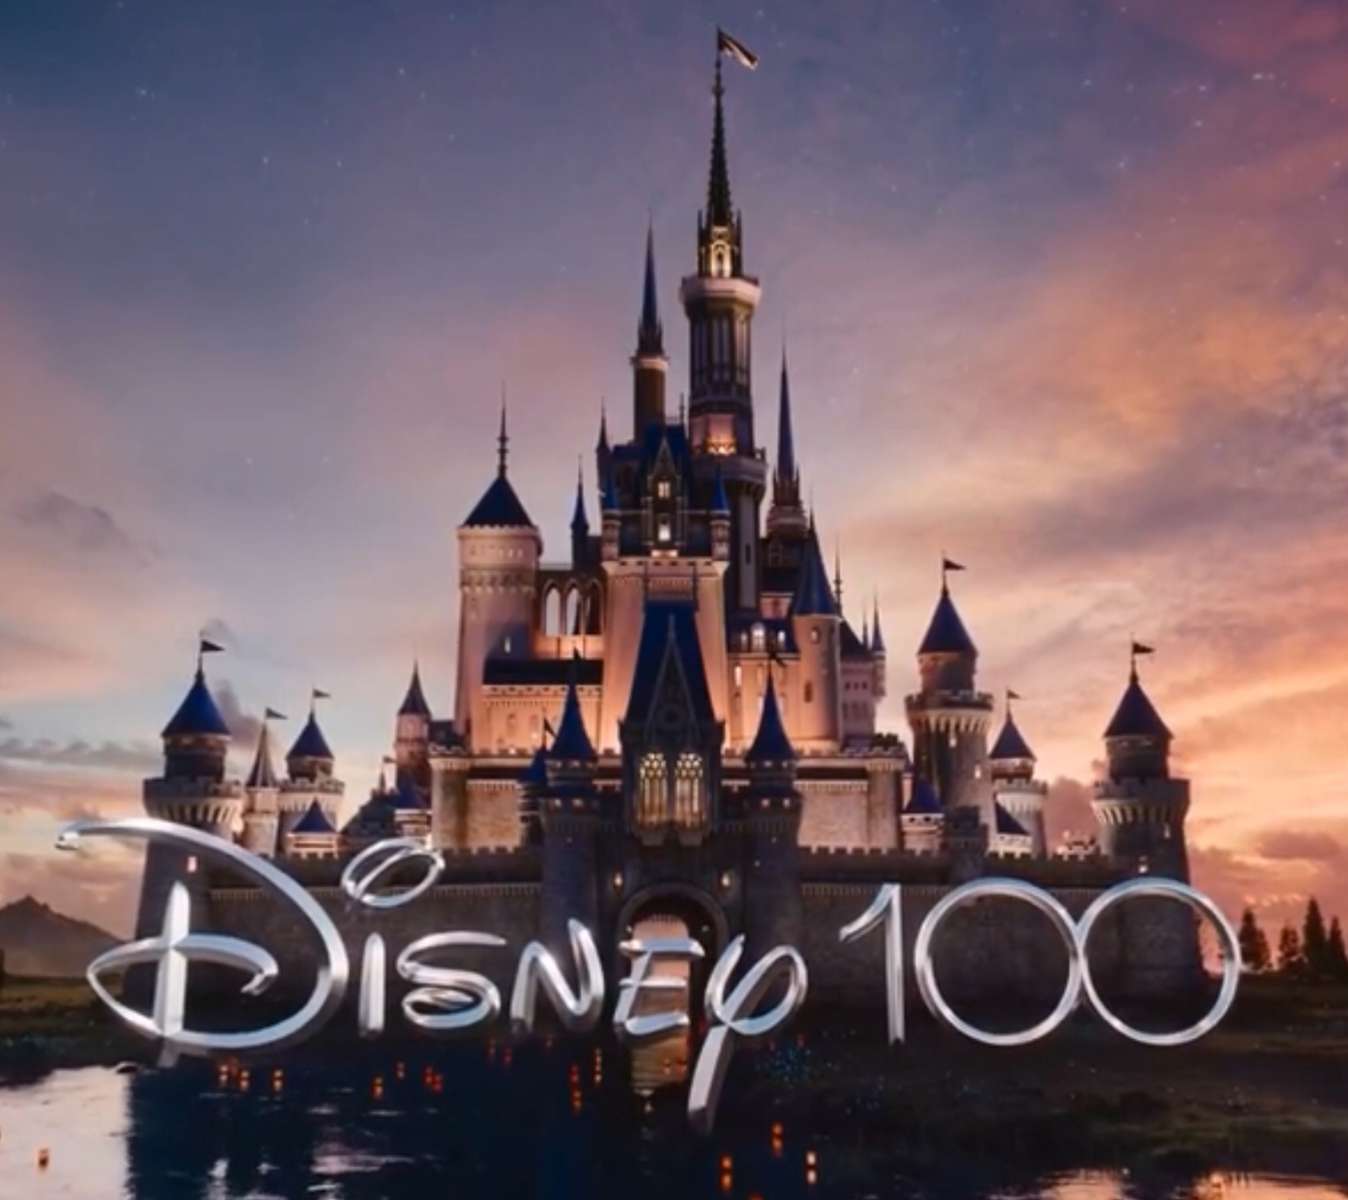 Disney 100 logotyp❤️❤️❤️❤️❤️ pussel på nätet